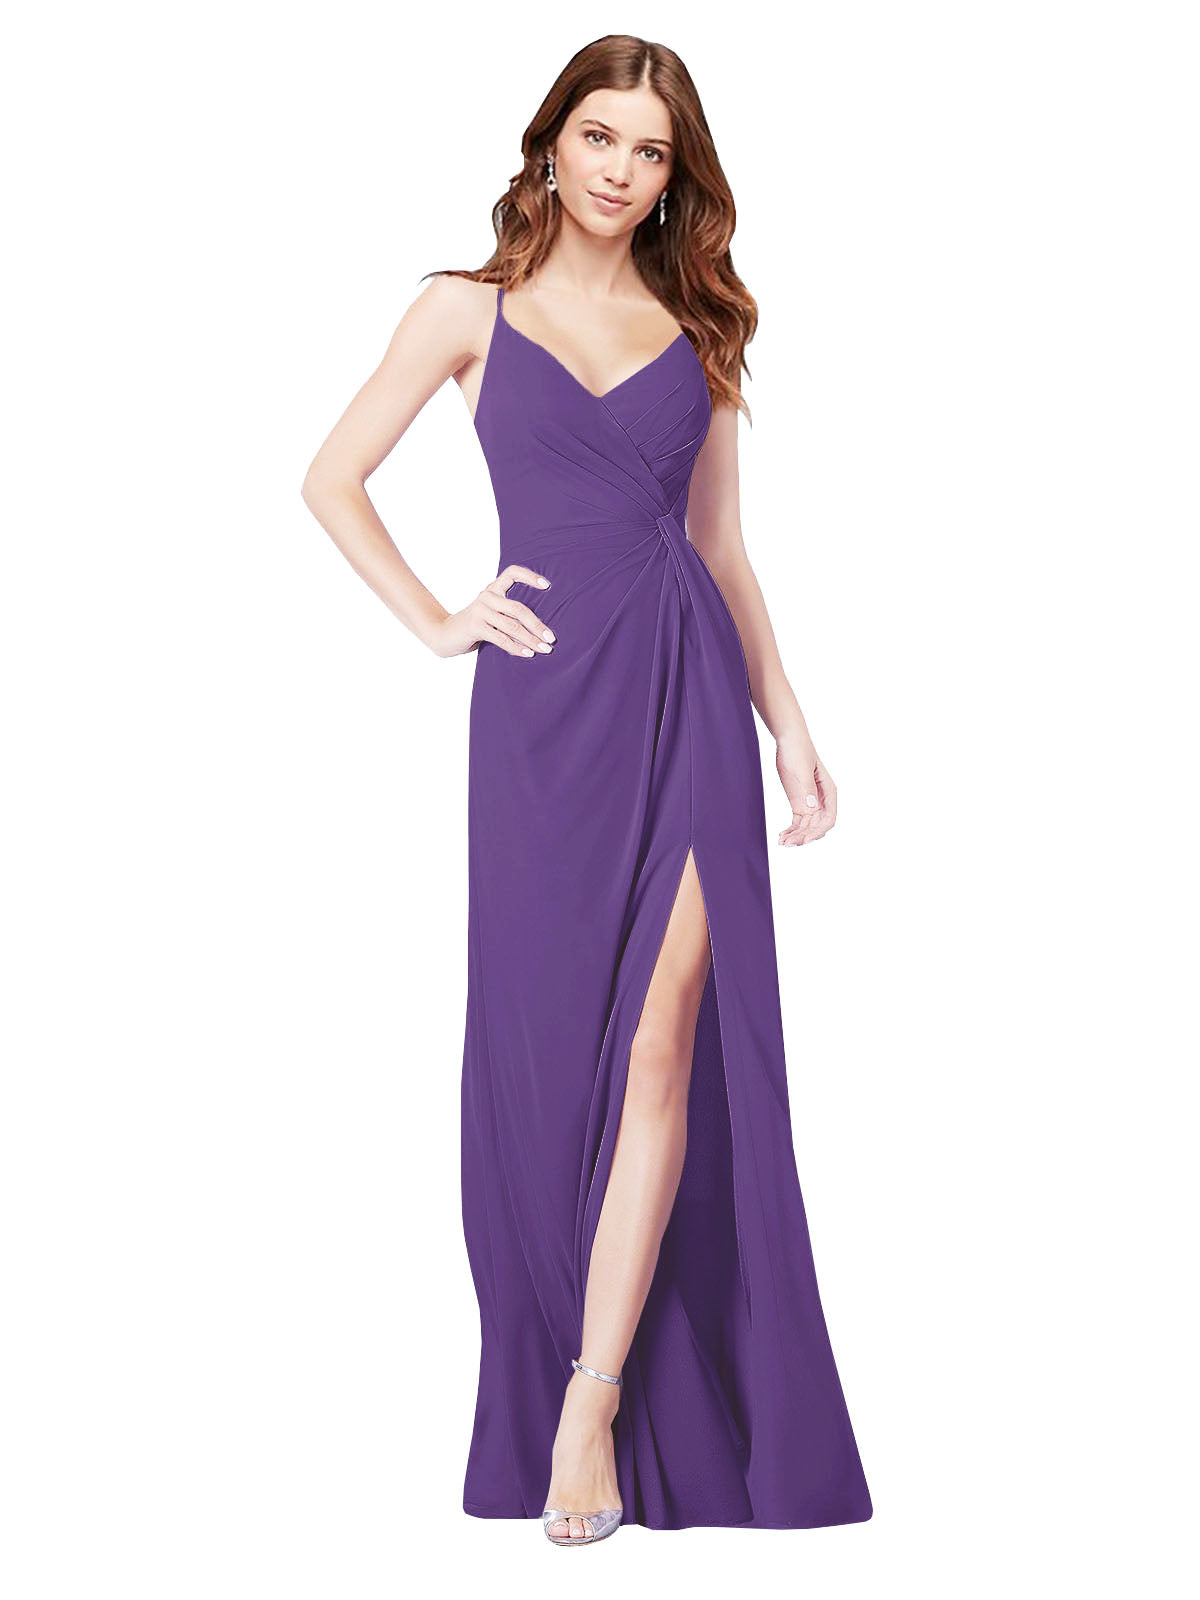 RightBrides Bradi Plum Purple A-Line Spaghetti Straps Sleeveless Long Bridesmaid Dress